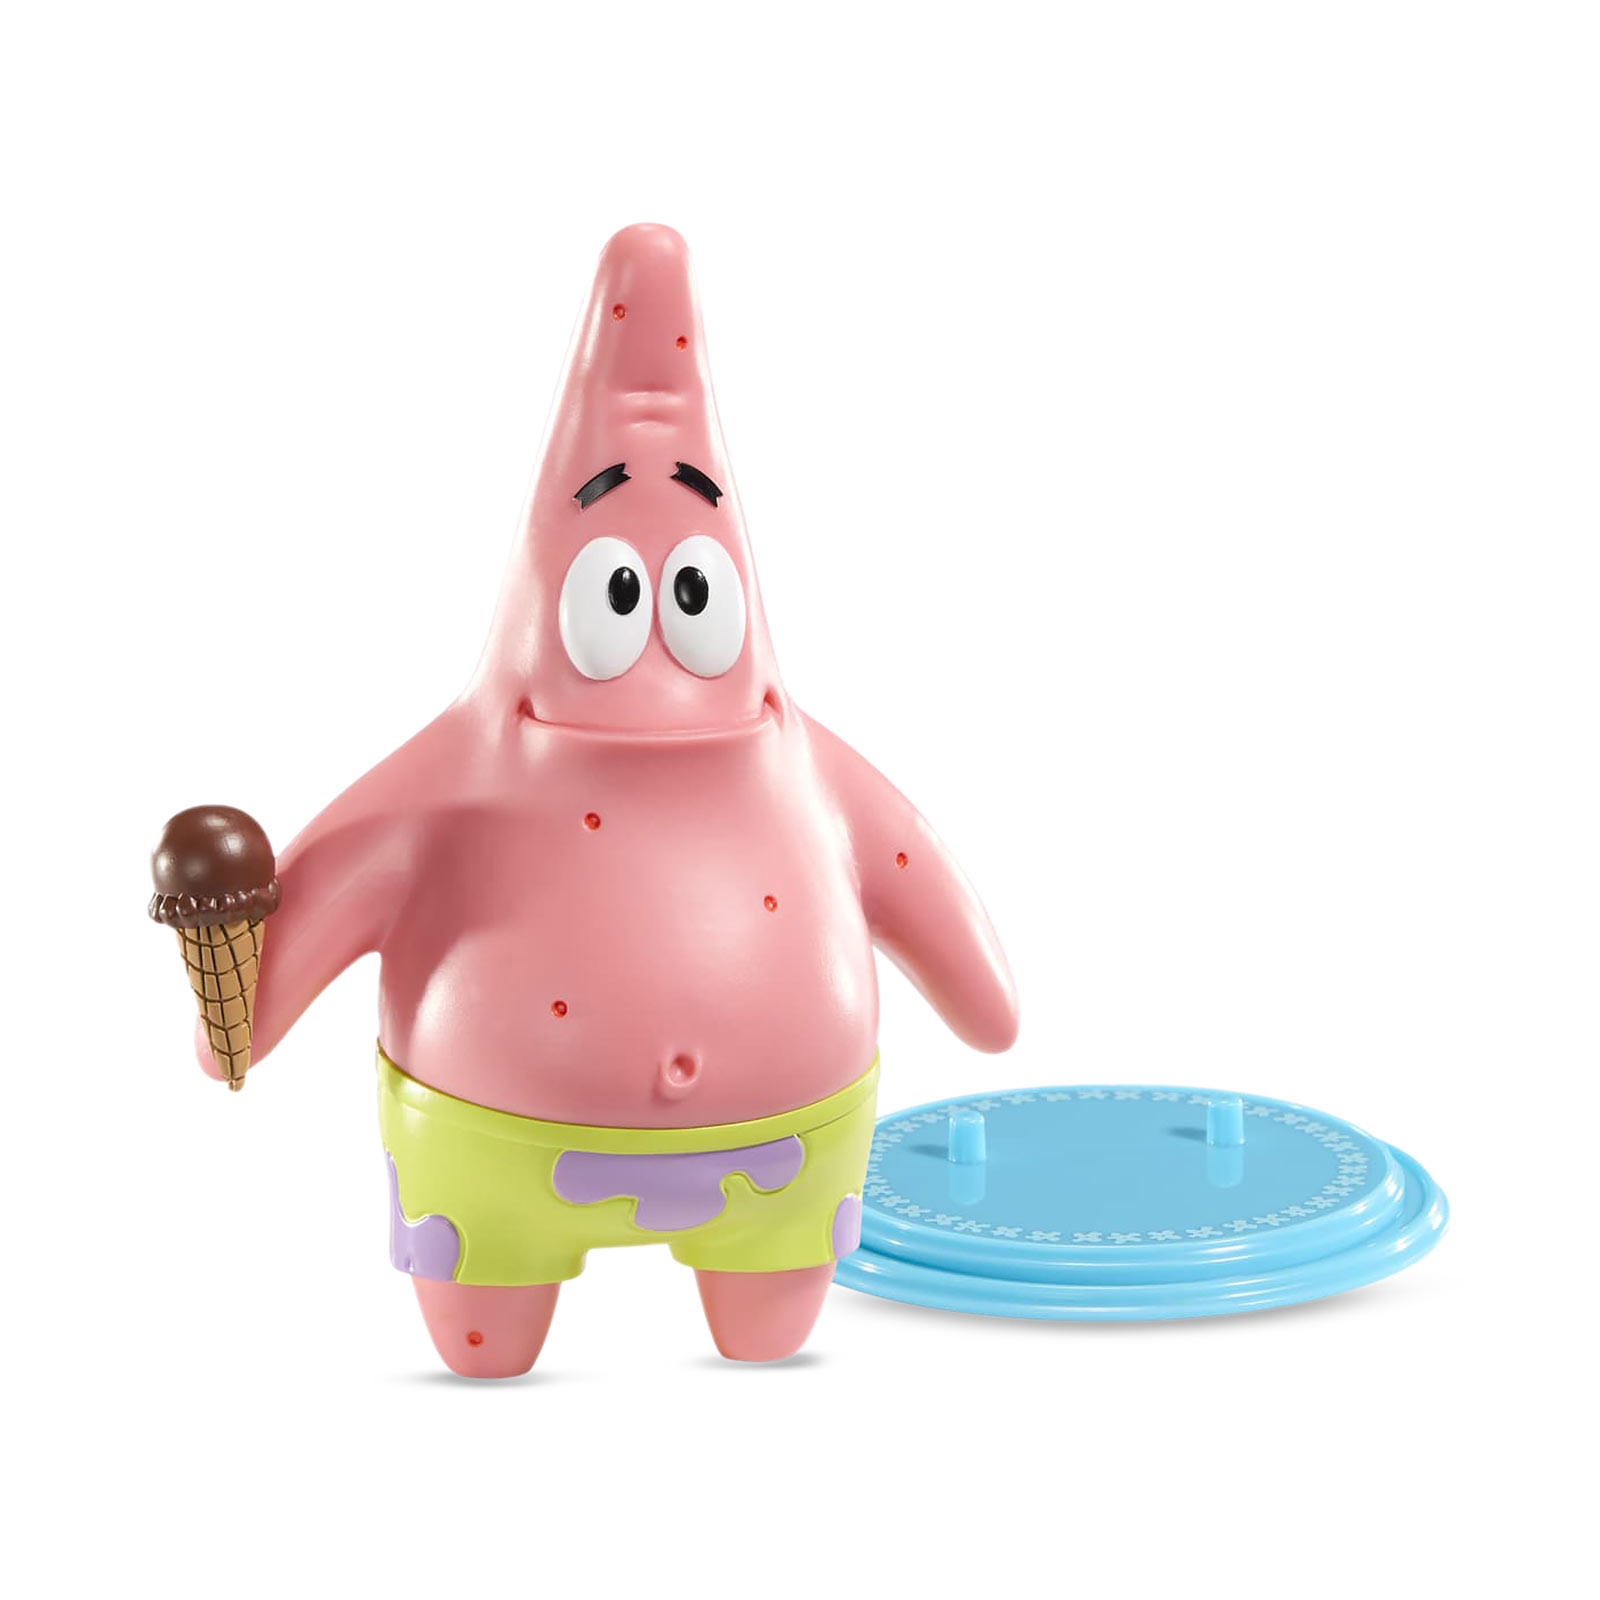 SpongeBob - Patrick Star Bendyfigs Figure